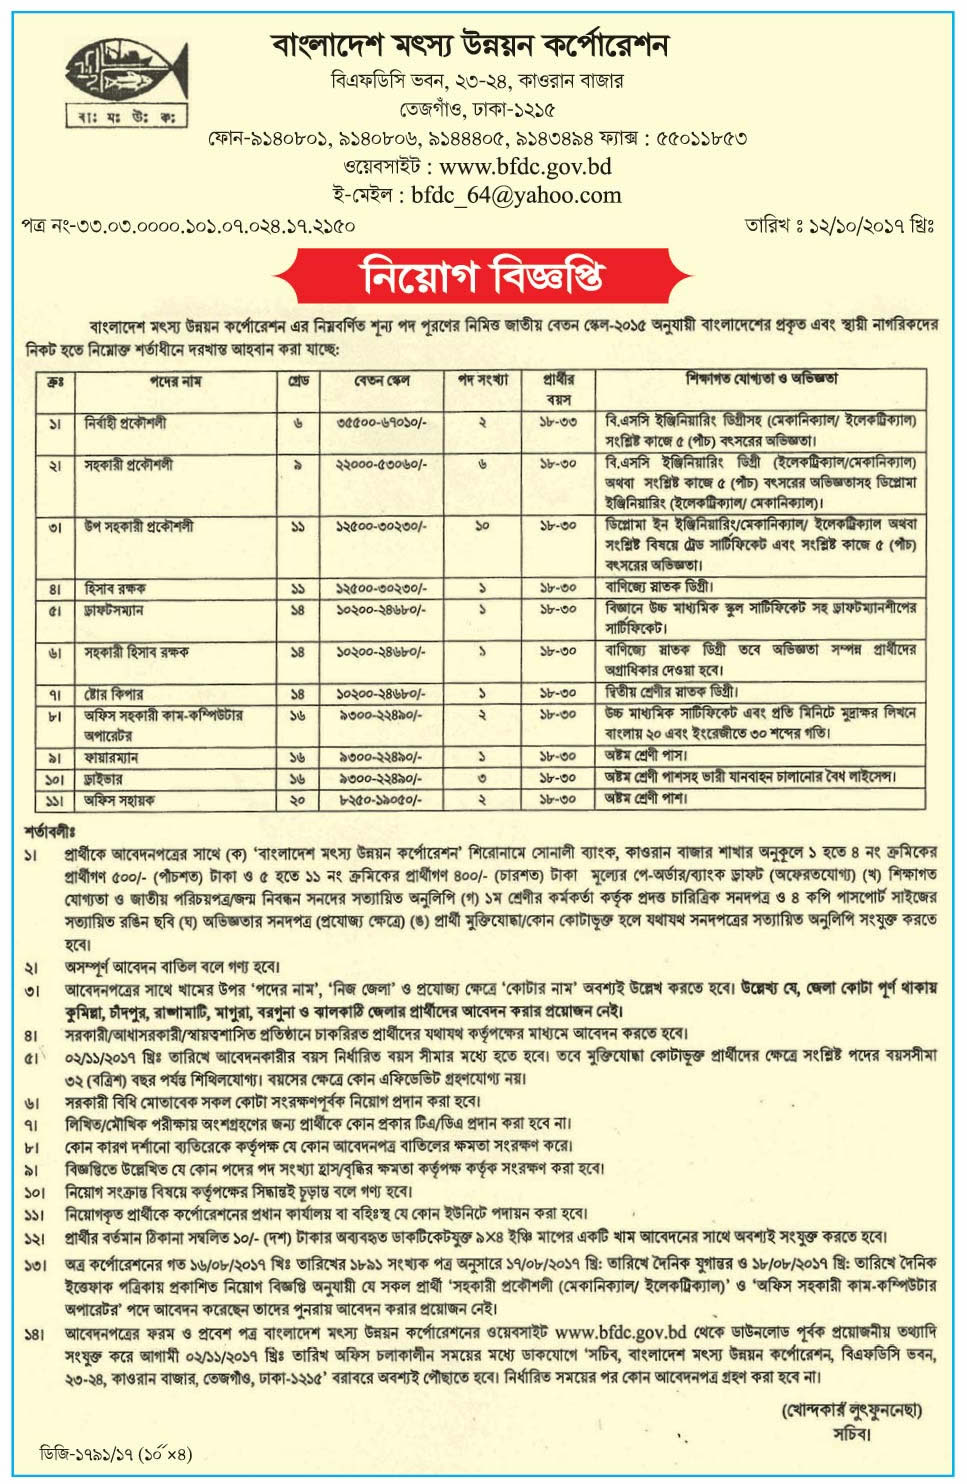 Bangladesh Fisheries Development Corporation Job Opportunity 2017